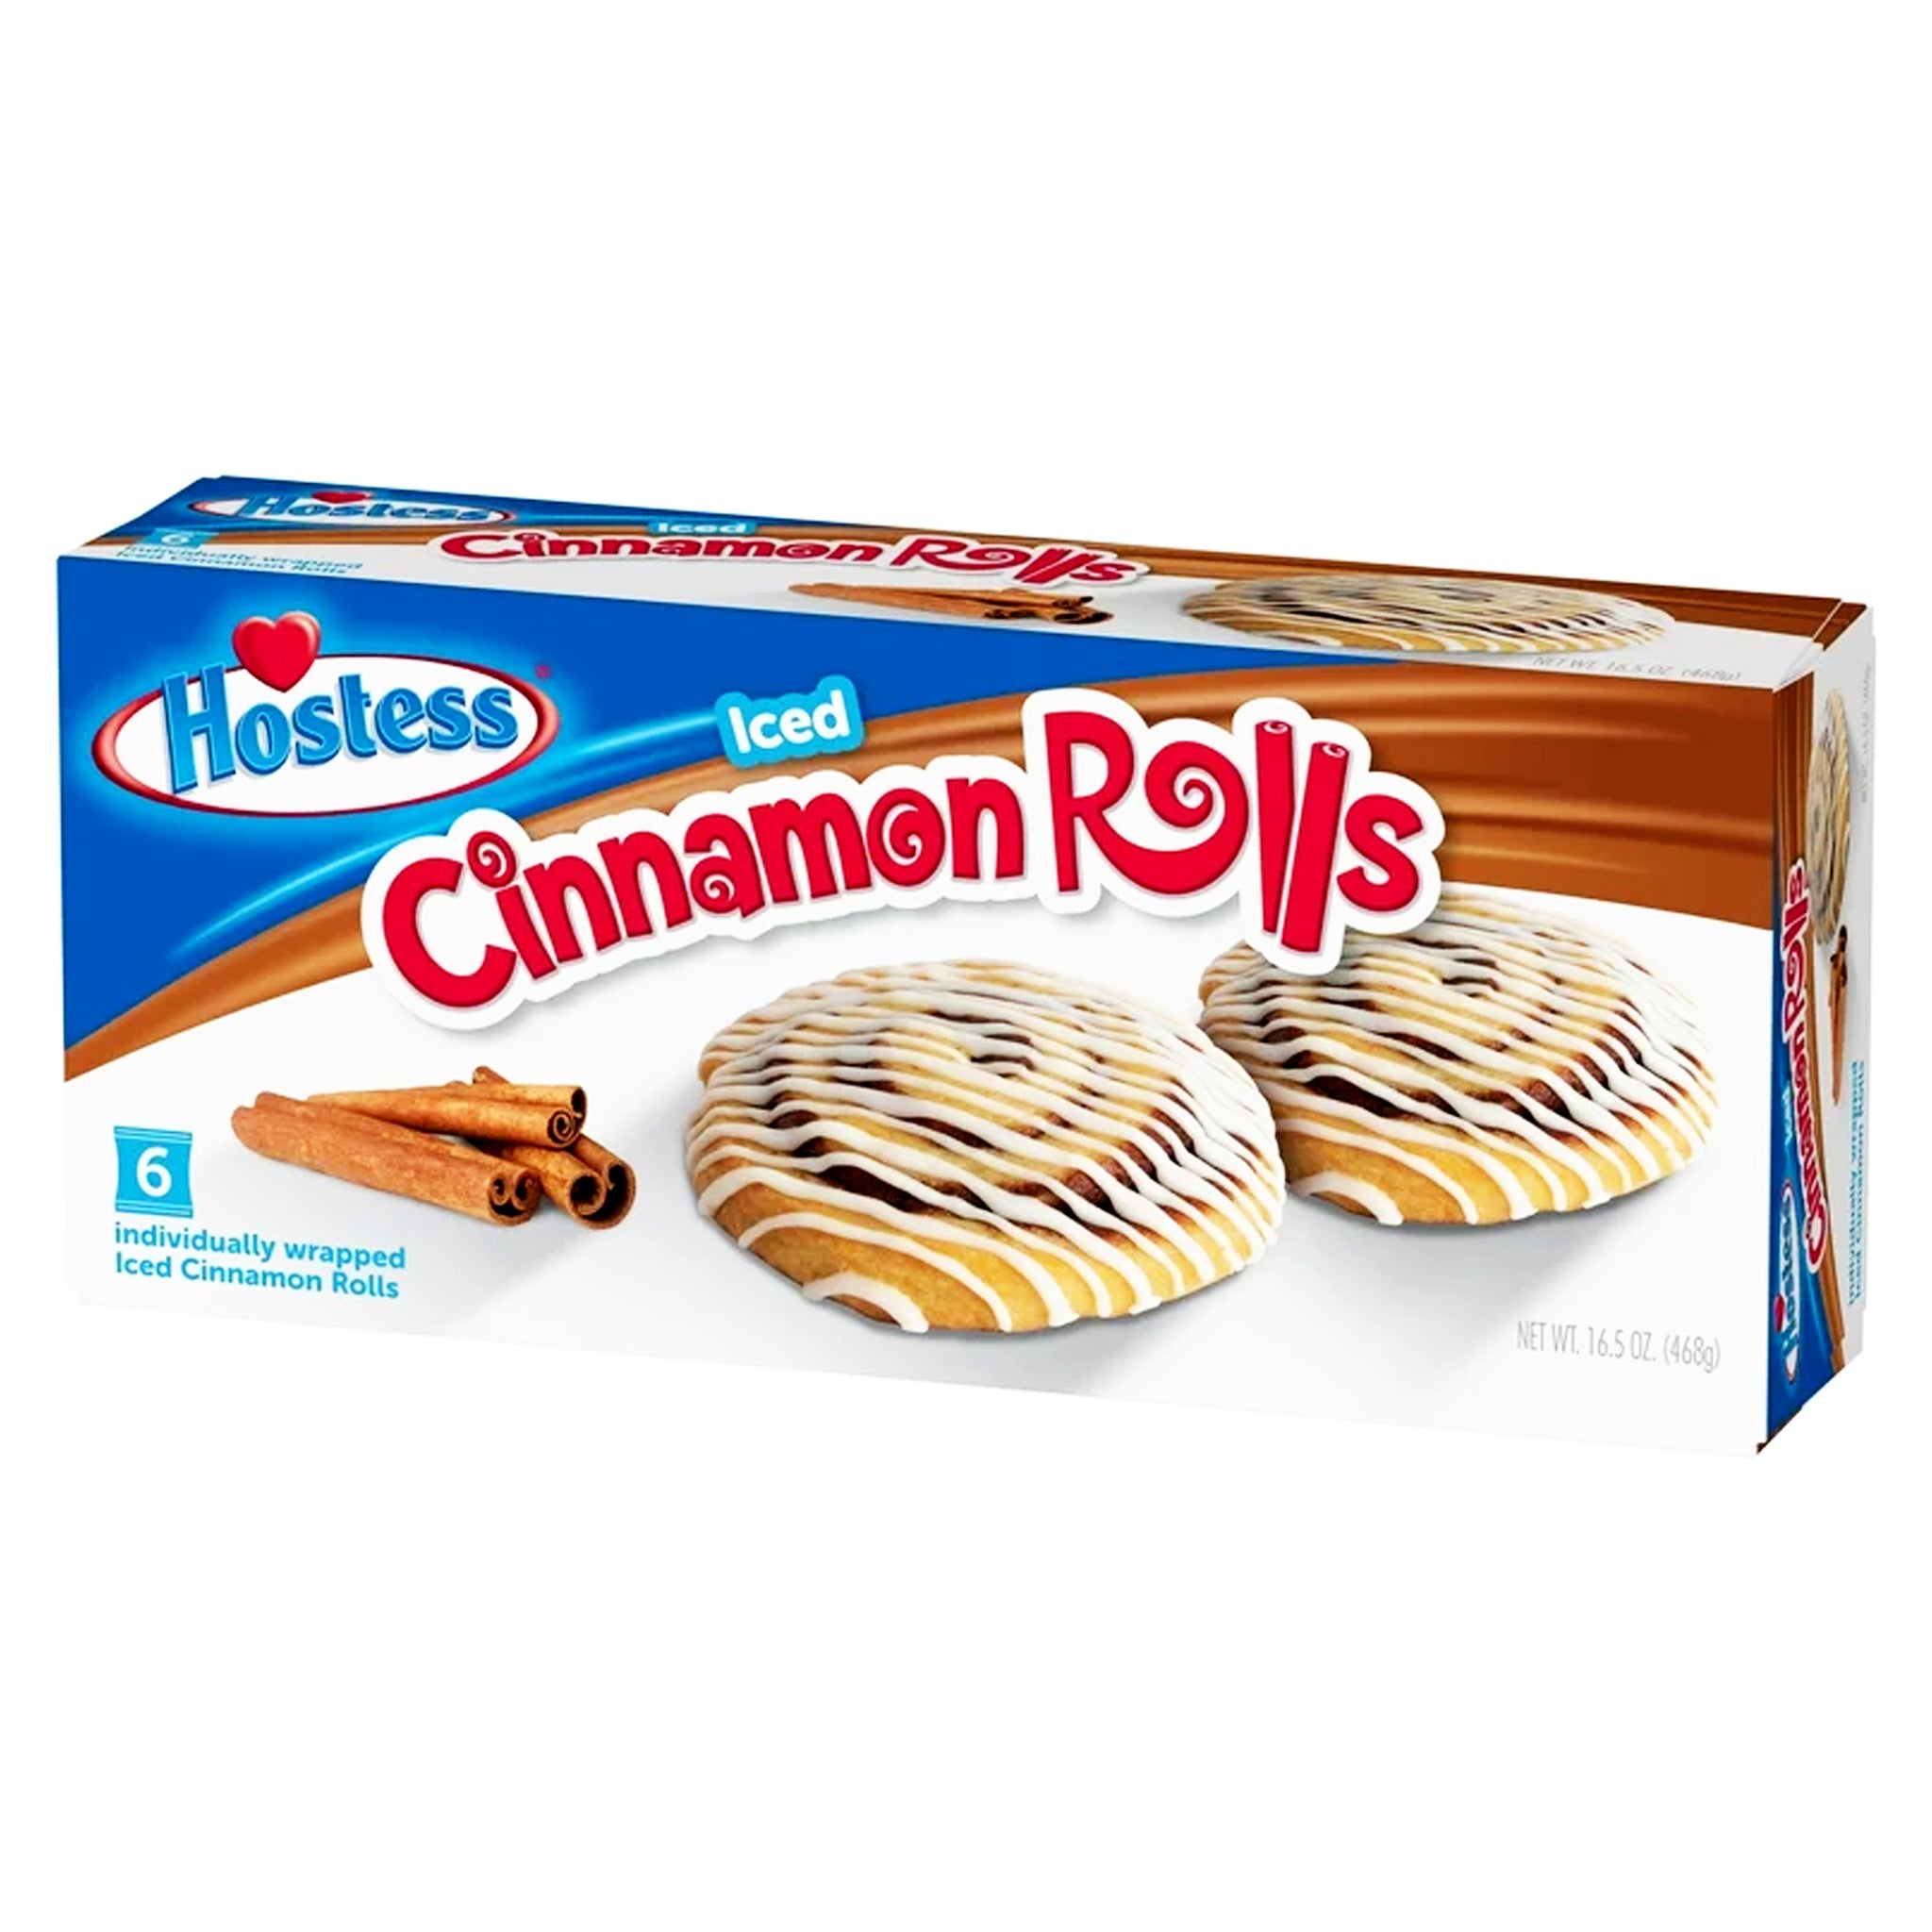 Hostess Cinnamon Rolls הוסטס רול קינמון מצופה סוכר